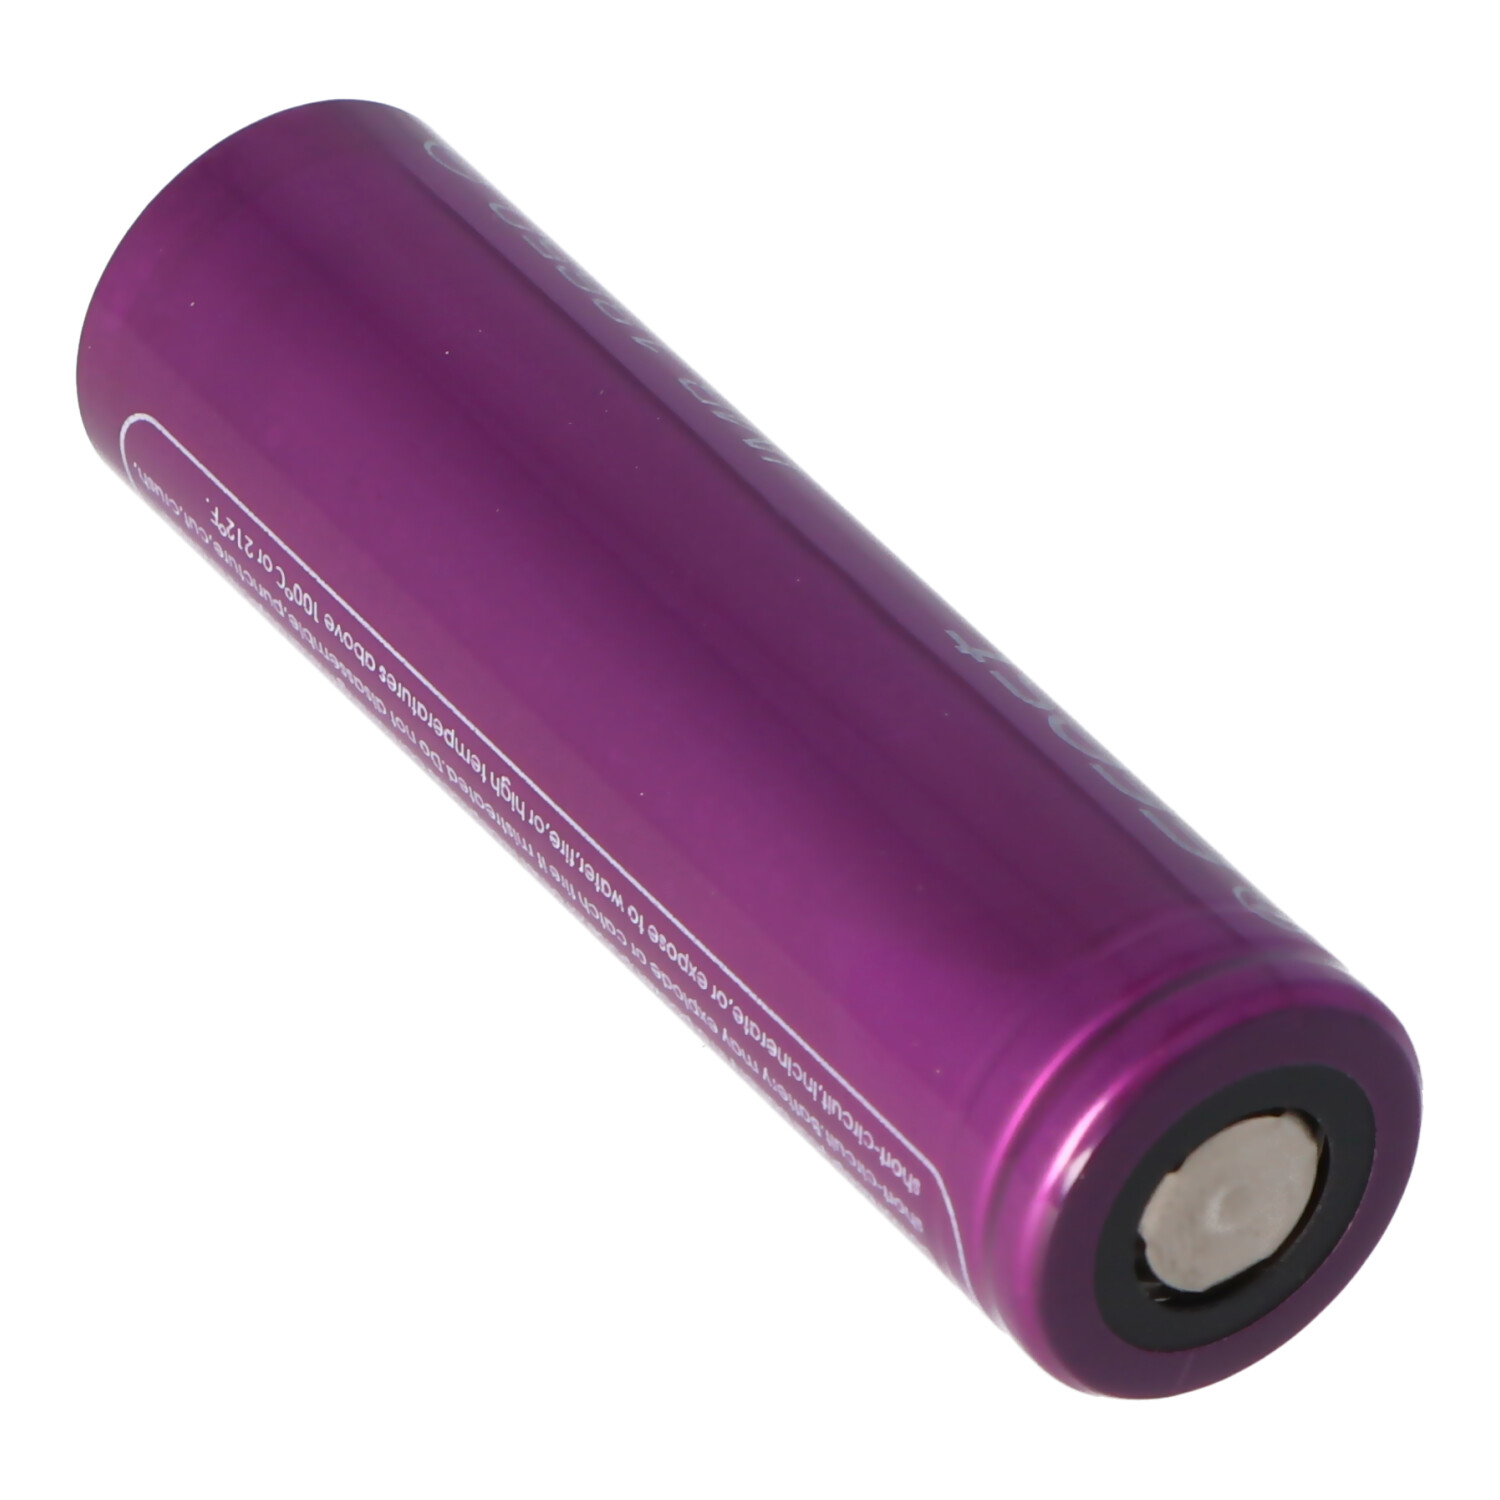 Efest Purple IMR 18650 3000mAh 3,6V - 3,7V min. 2900mAh typ. 3000mAh maximal 35A Stromabgabe (Flat Top)